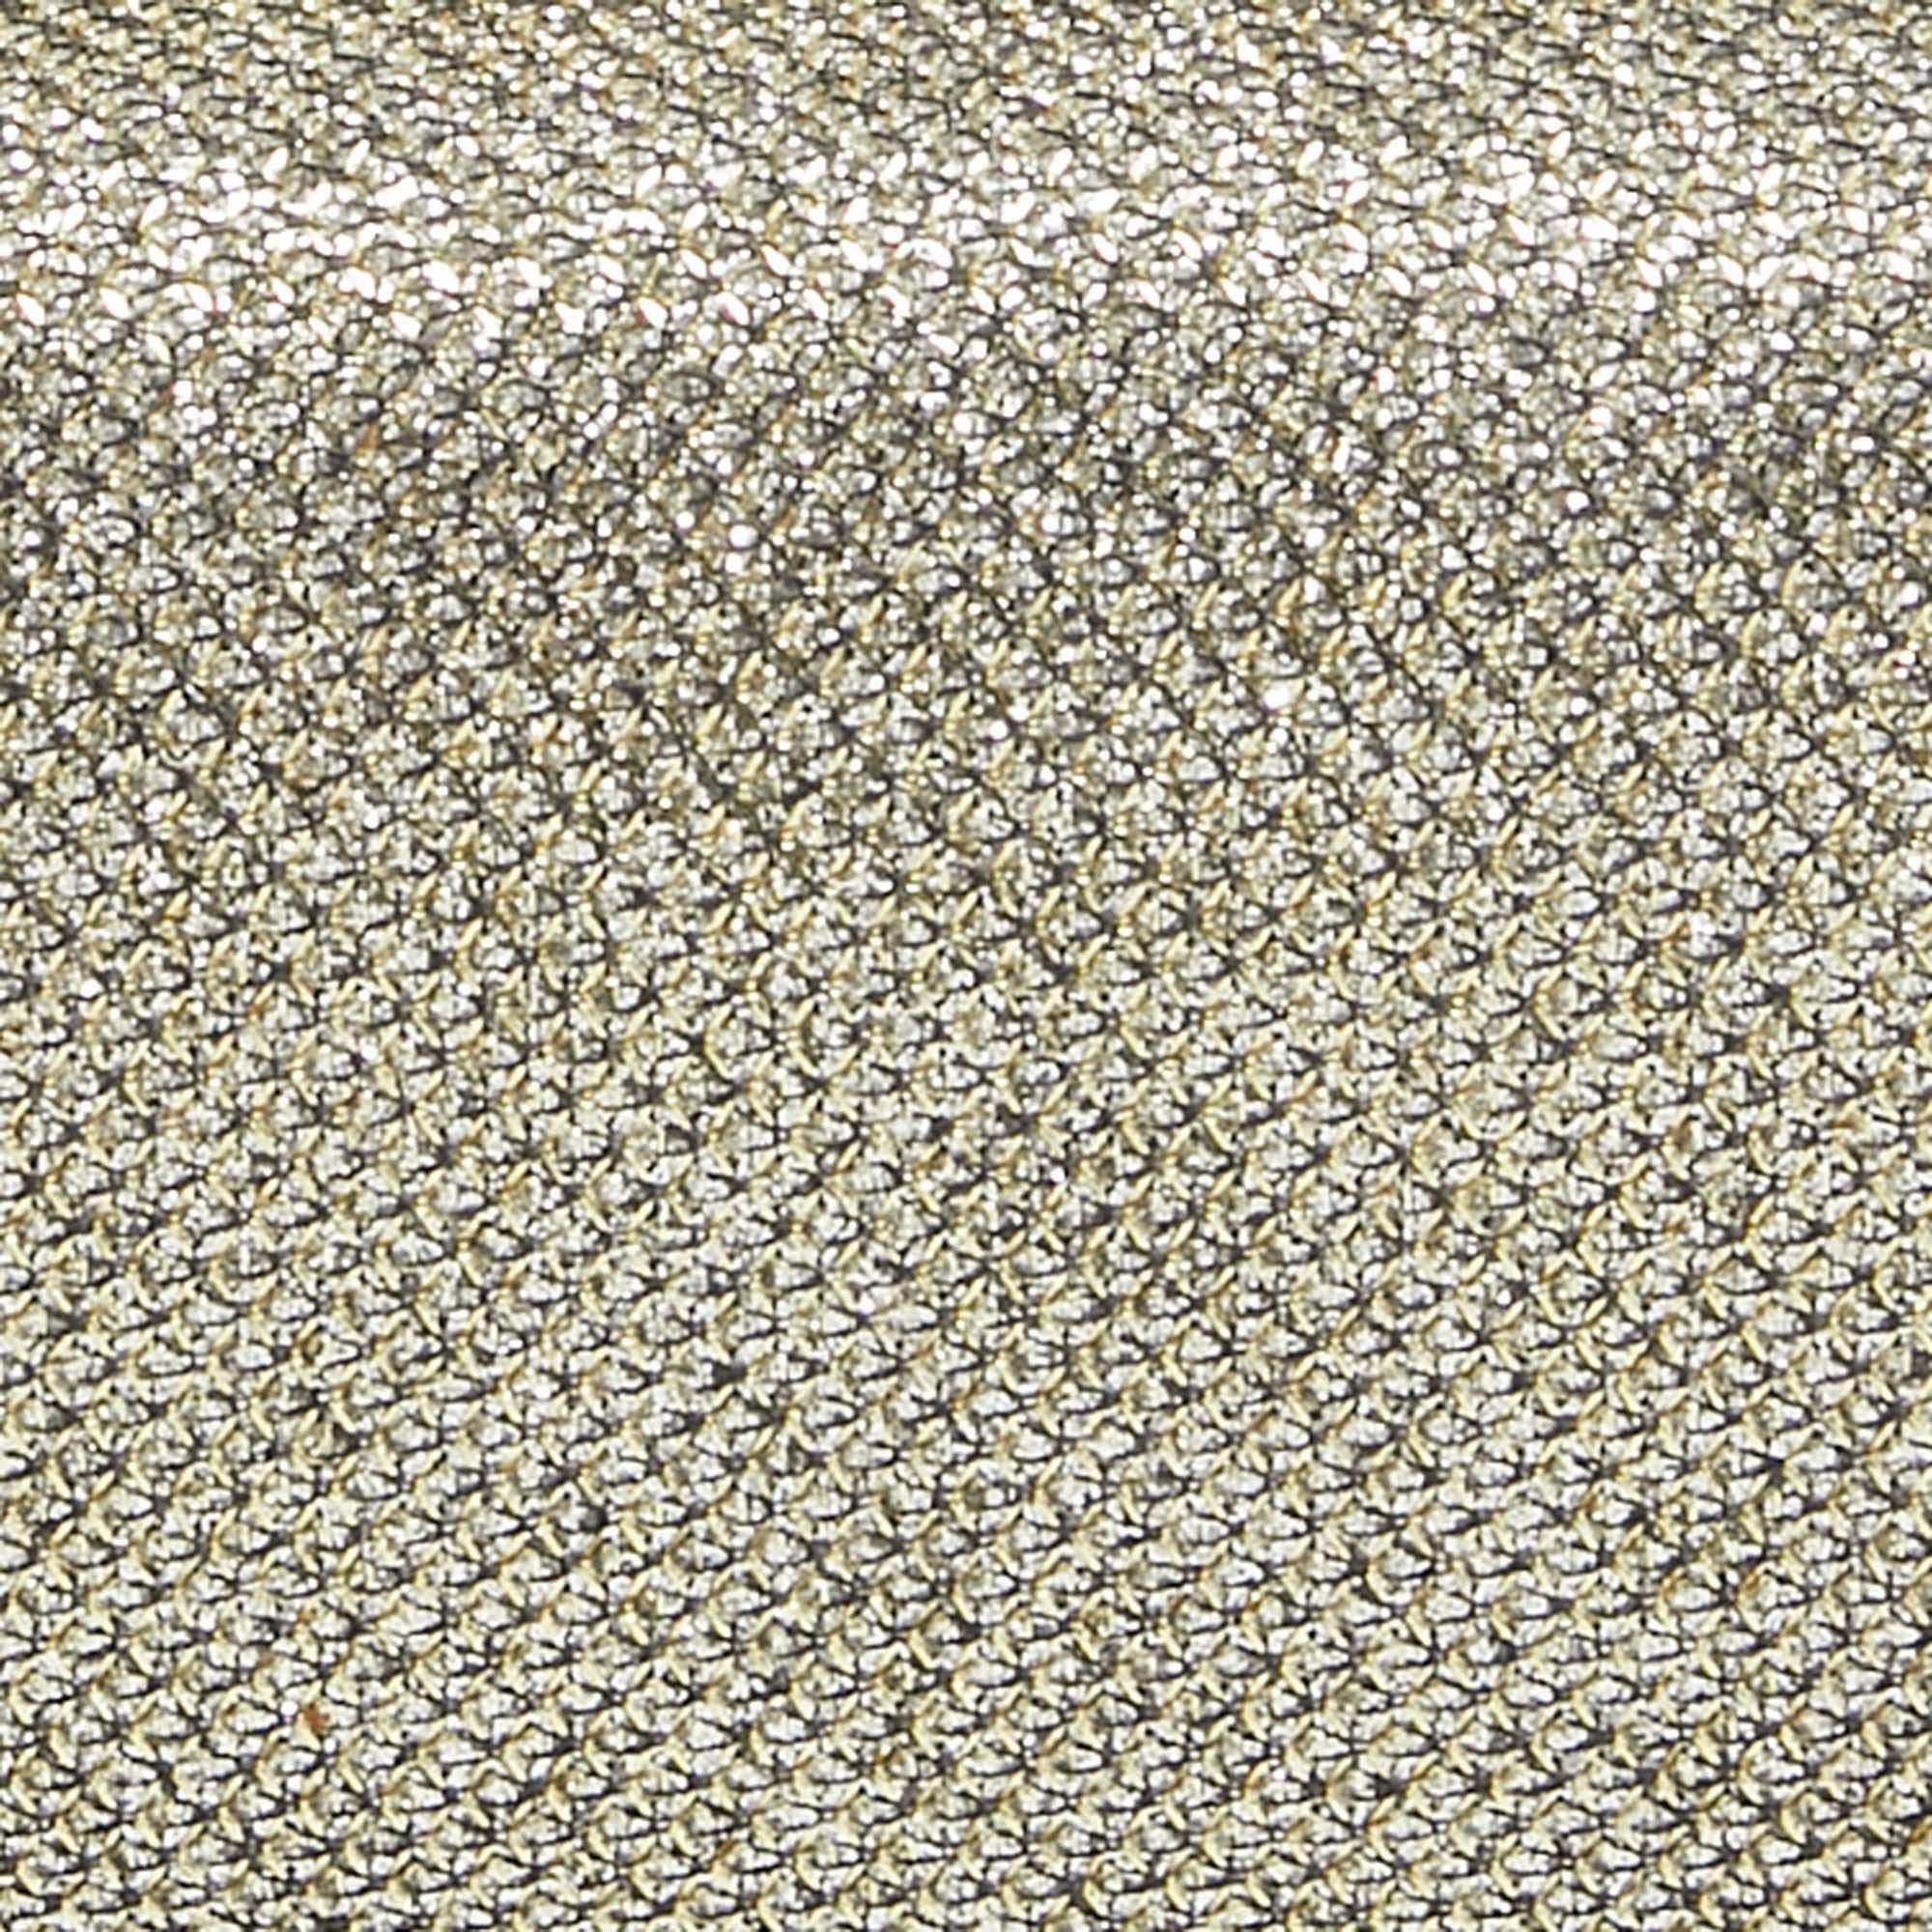 Jimmy Choo Gold/Silver Glitter Lurex Fabric Twill Tube Clutch 4